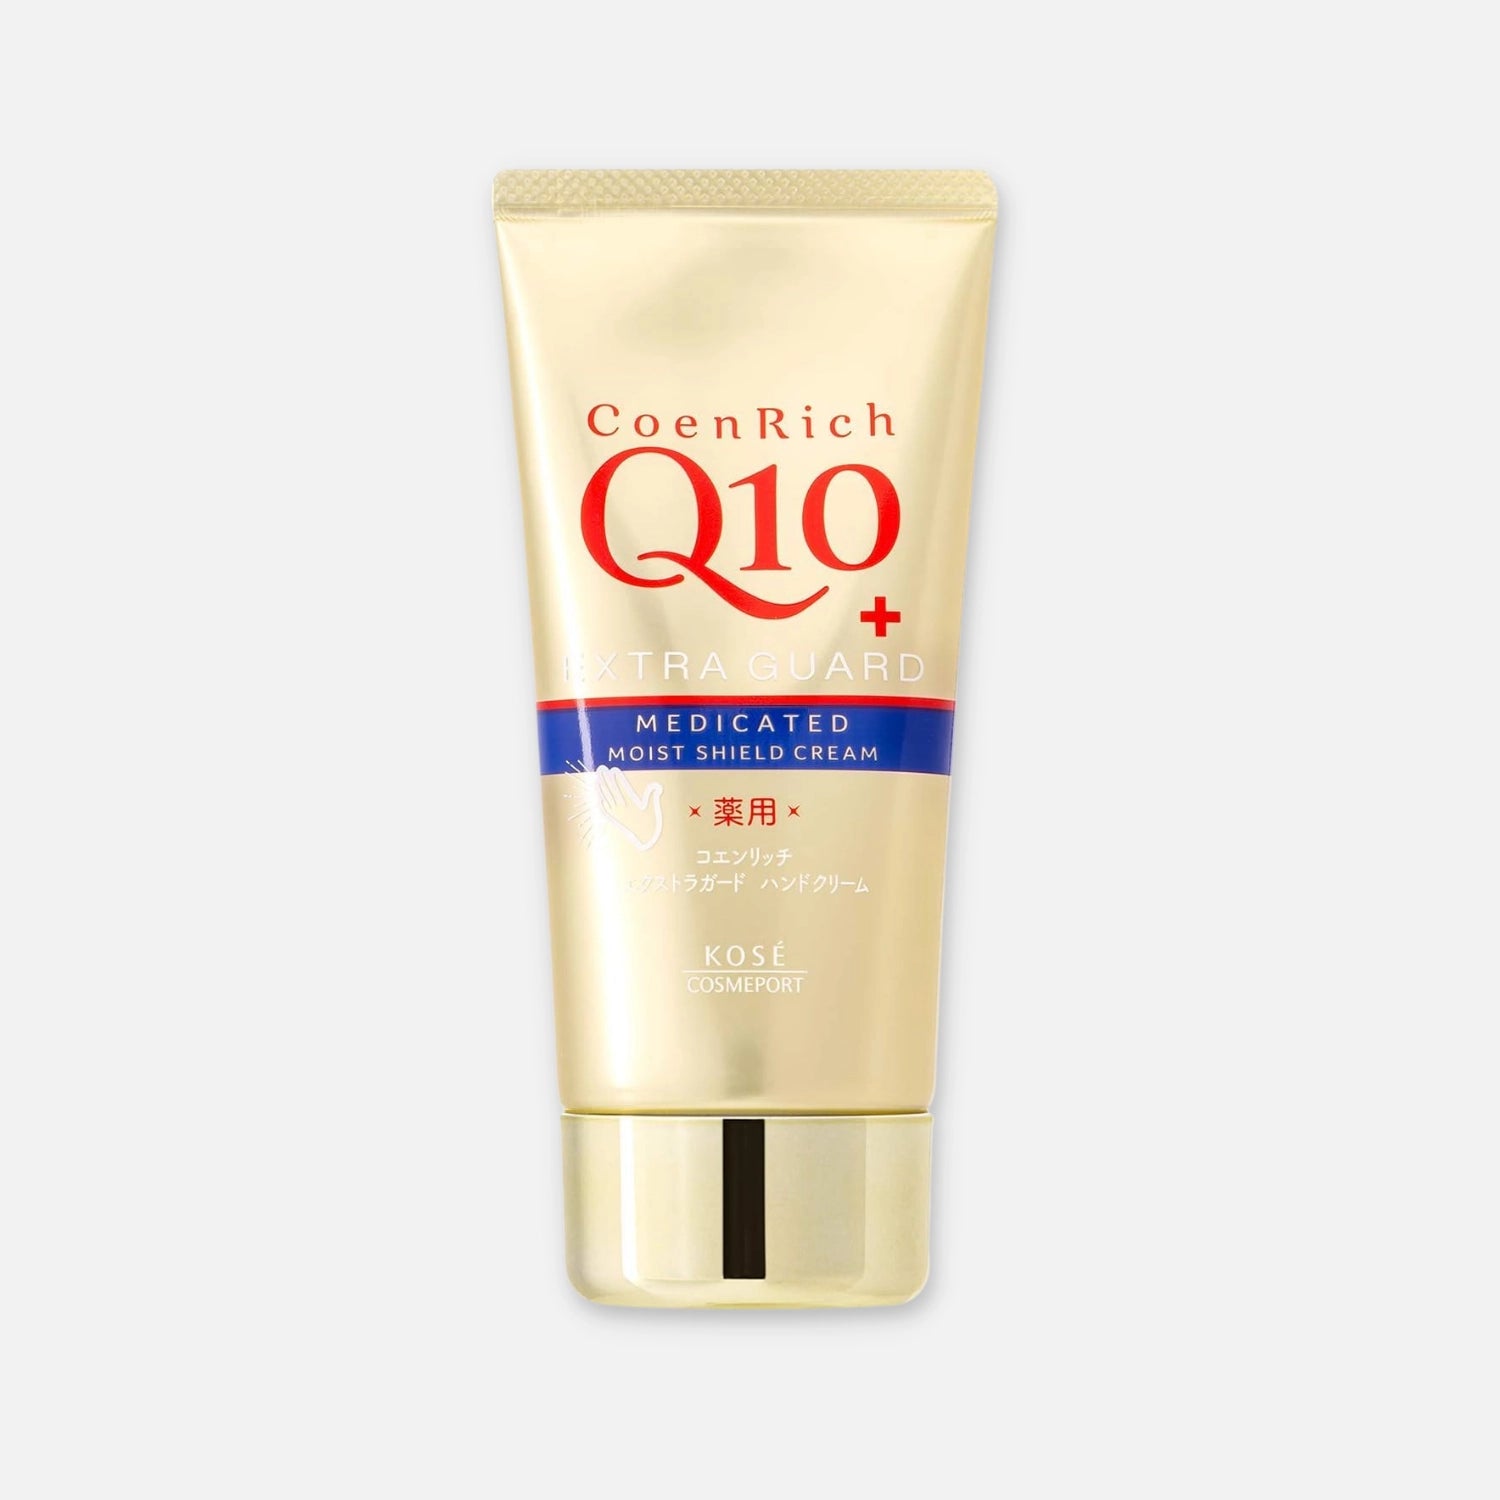 Kose Coenrich Q10 Extra Guard Hand Cream 80g - Buy Me Japan